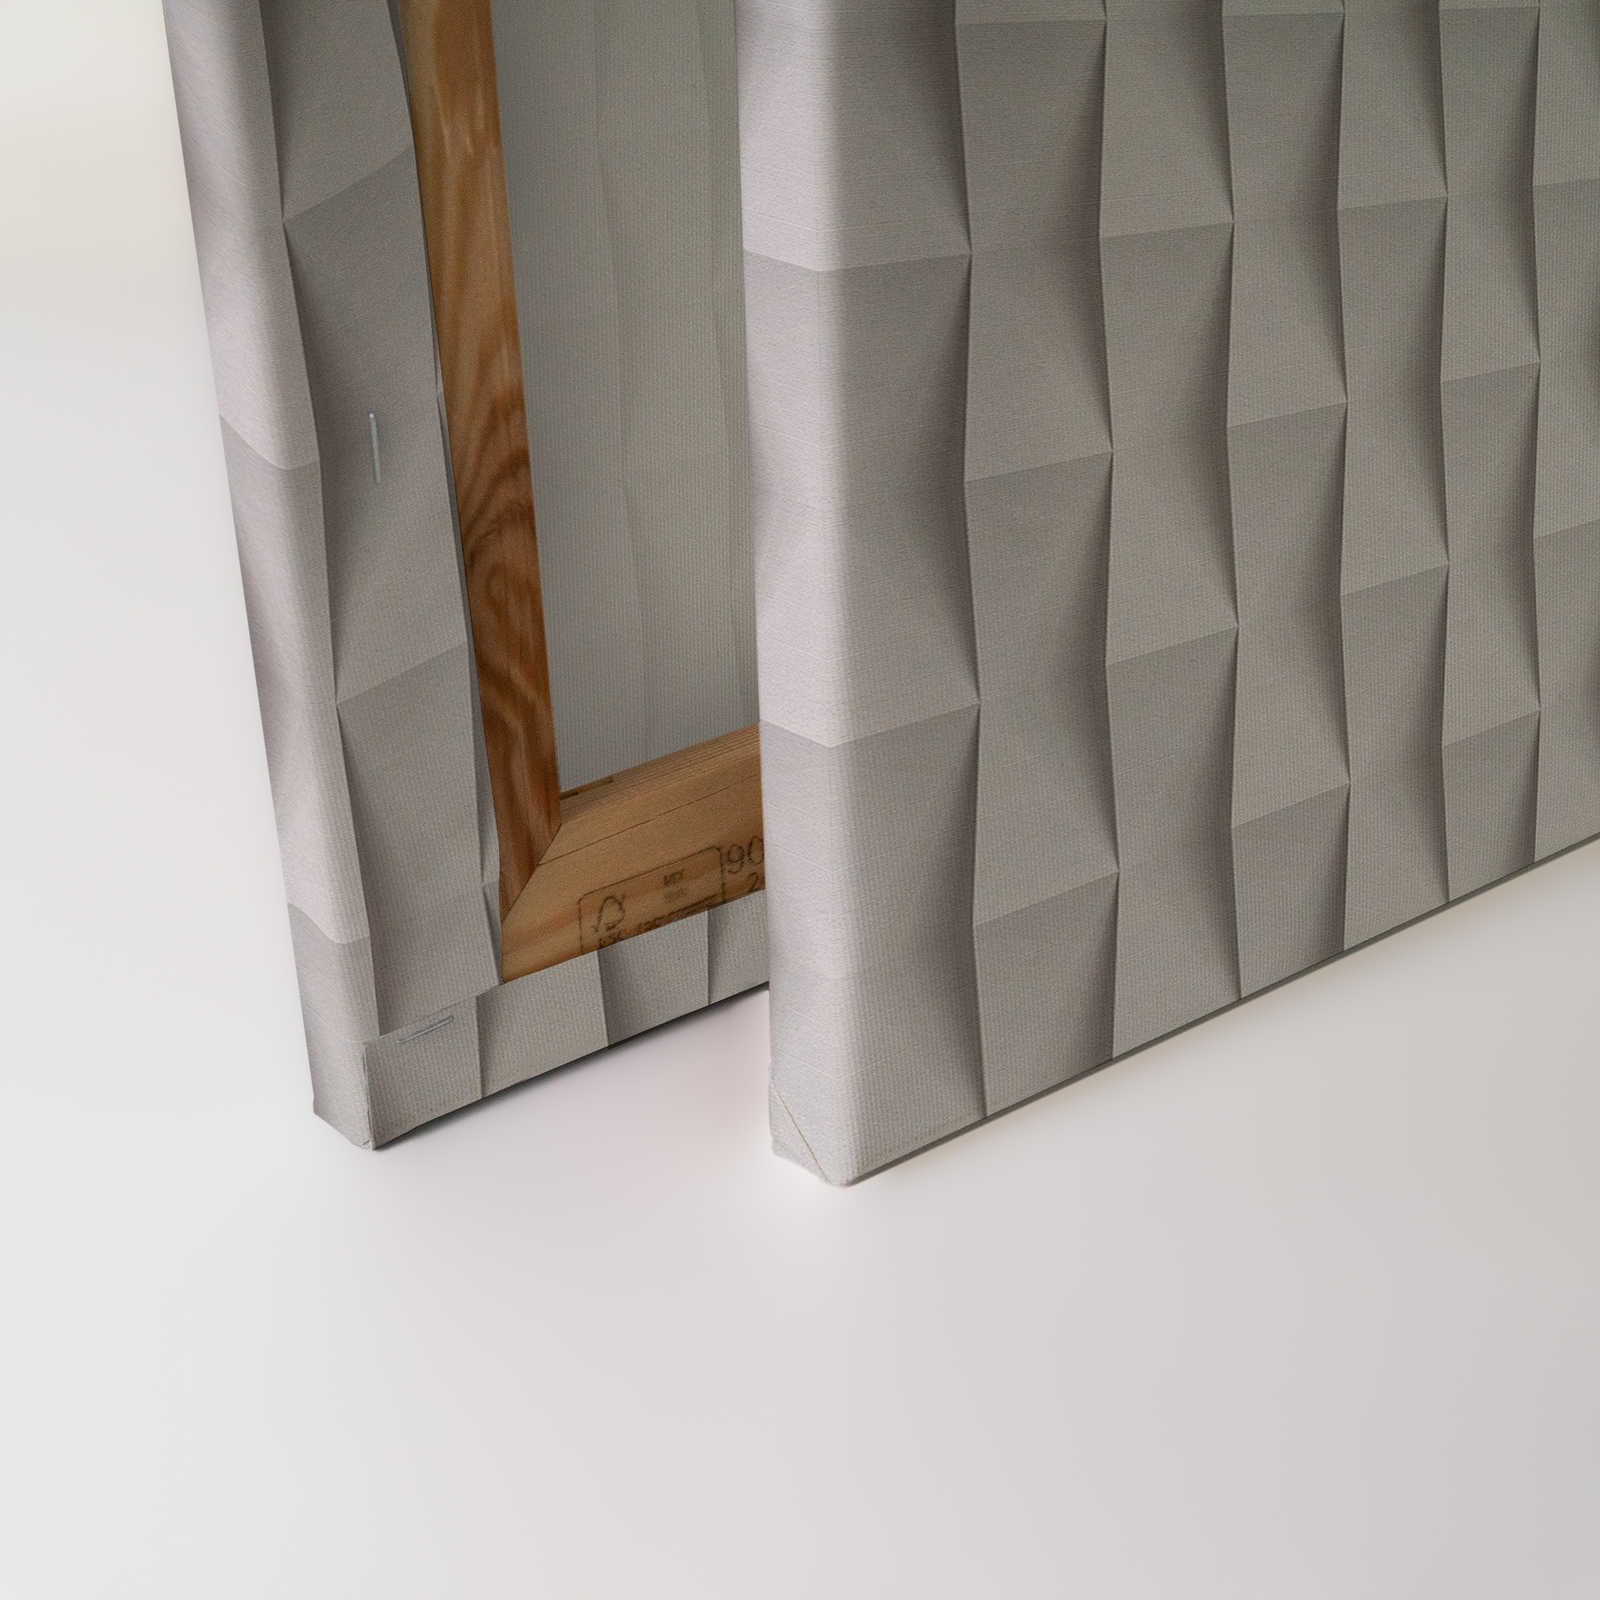             Paper House 2 - 3D Leinwandbild Papier Falten Design mit Schattenwurf – 0,90 m x 0,60 m
        